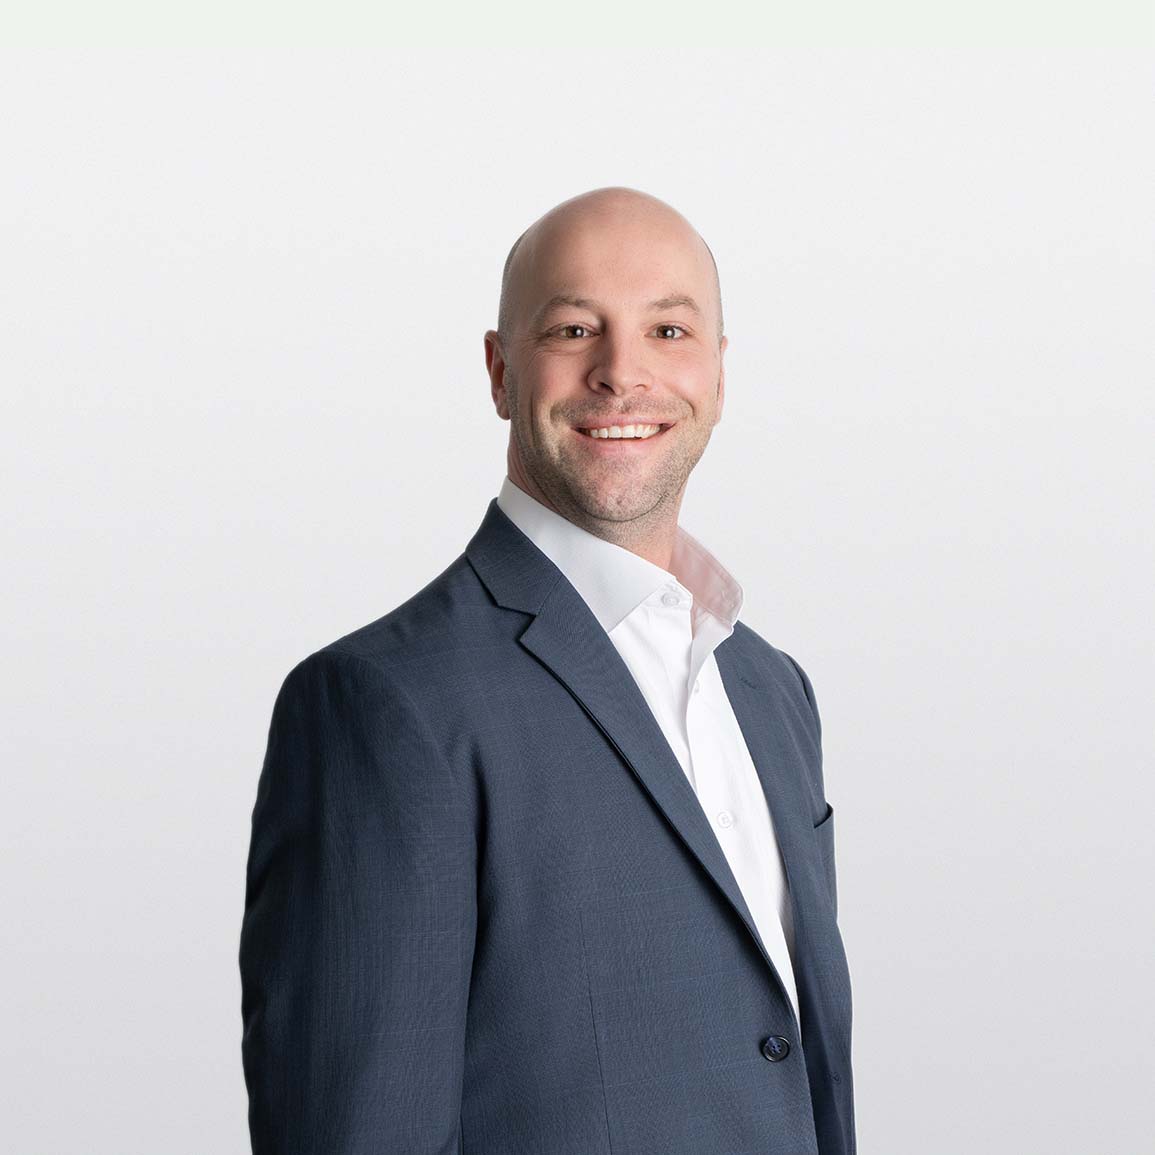  Image of Adam Gast Senior Financial Advisor on white background